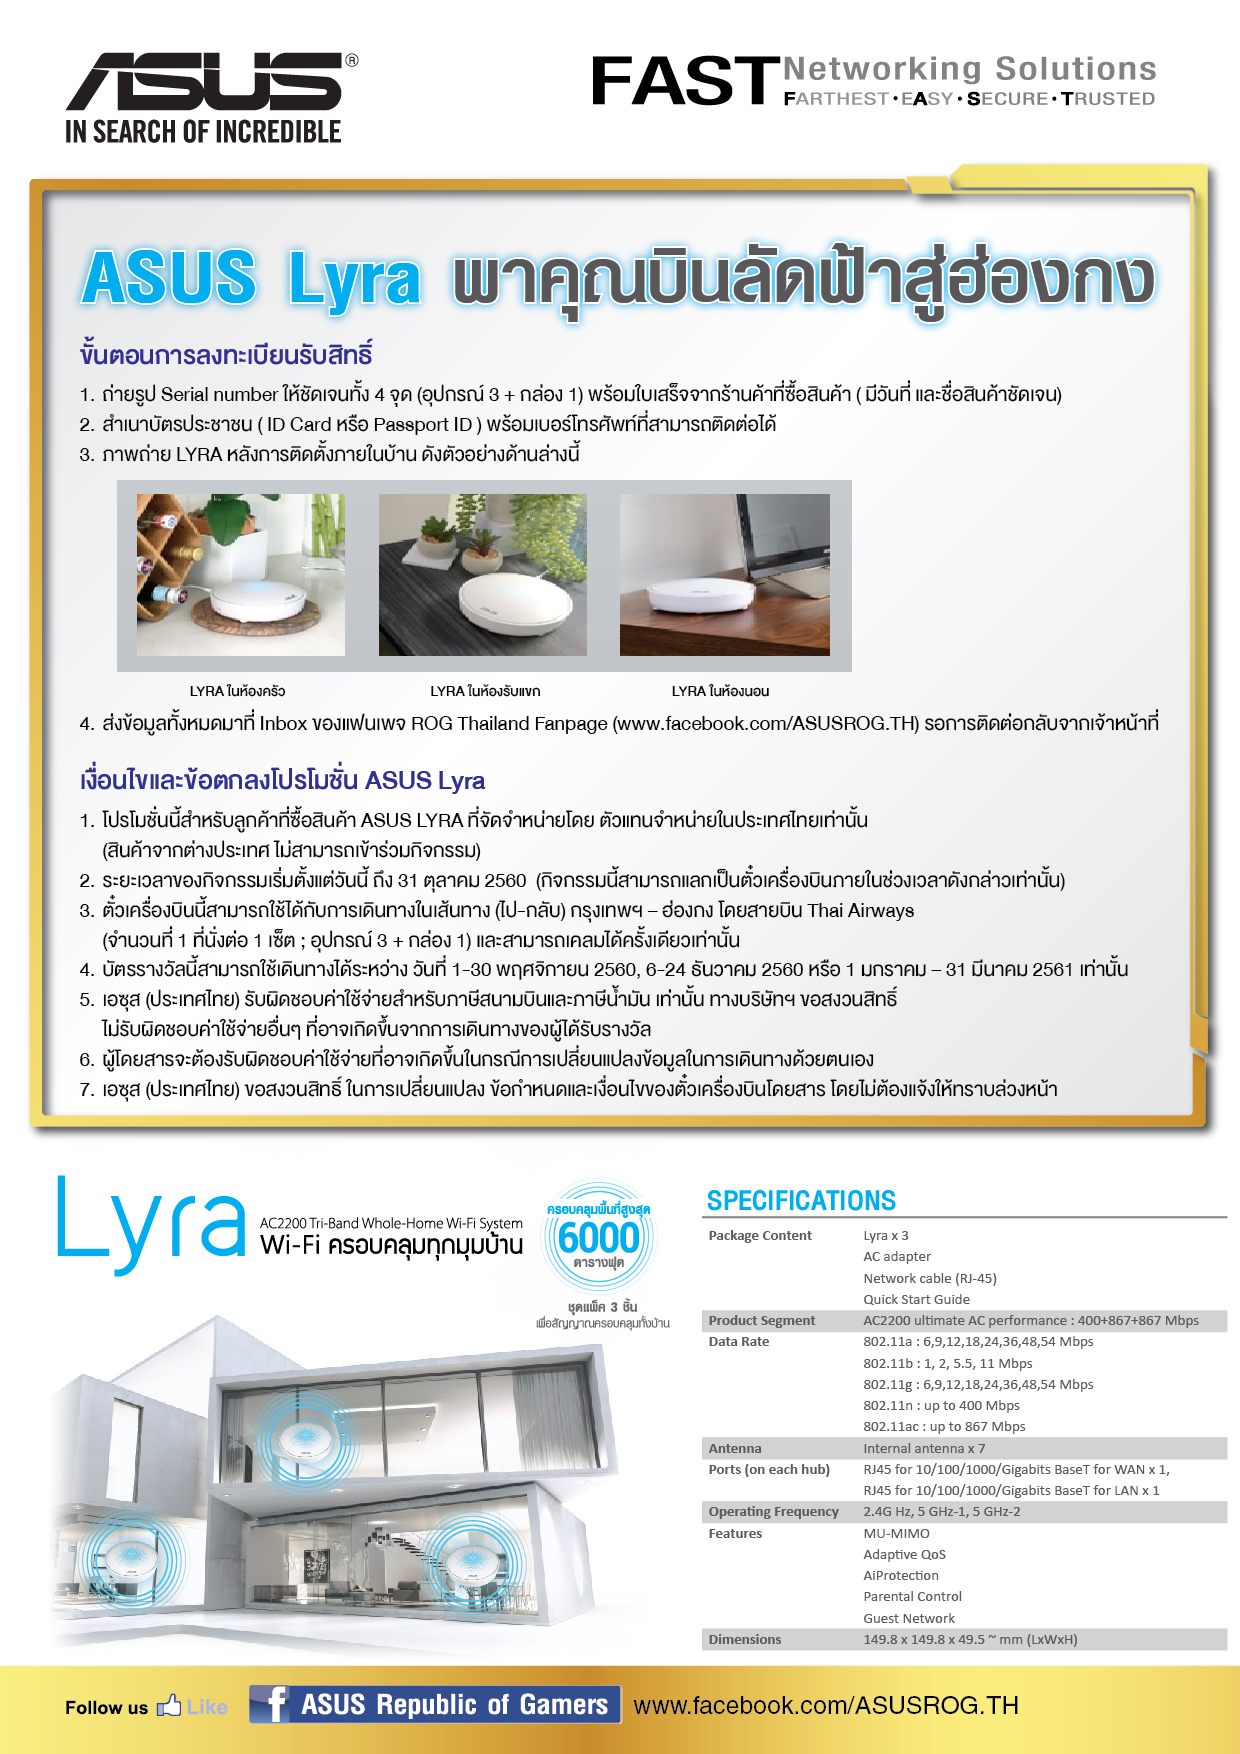 lyra promotion 02 ASUS จัดโปรโมชั่น ASUS Lyra พาคุณบินลัดฟ้าสู่ฮ่องกง เมื่อคุณซื้อ ASUS Lyra รับทันที! ตั๋วเครื่องบินเดินทางไปกลับ กรุงเทพฯ ฮ่องกง สุด Exclusive